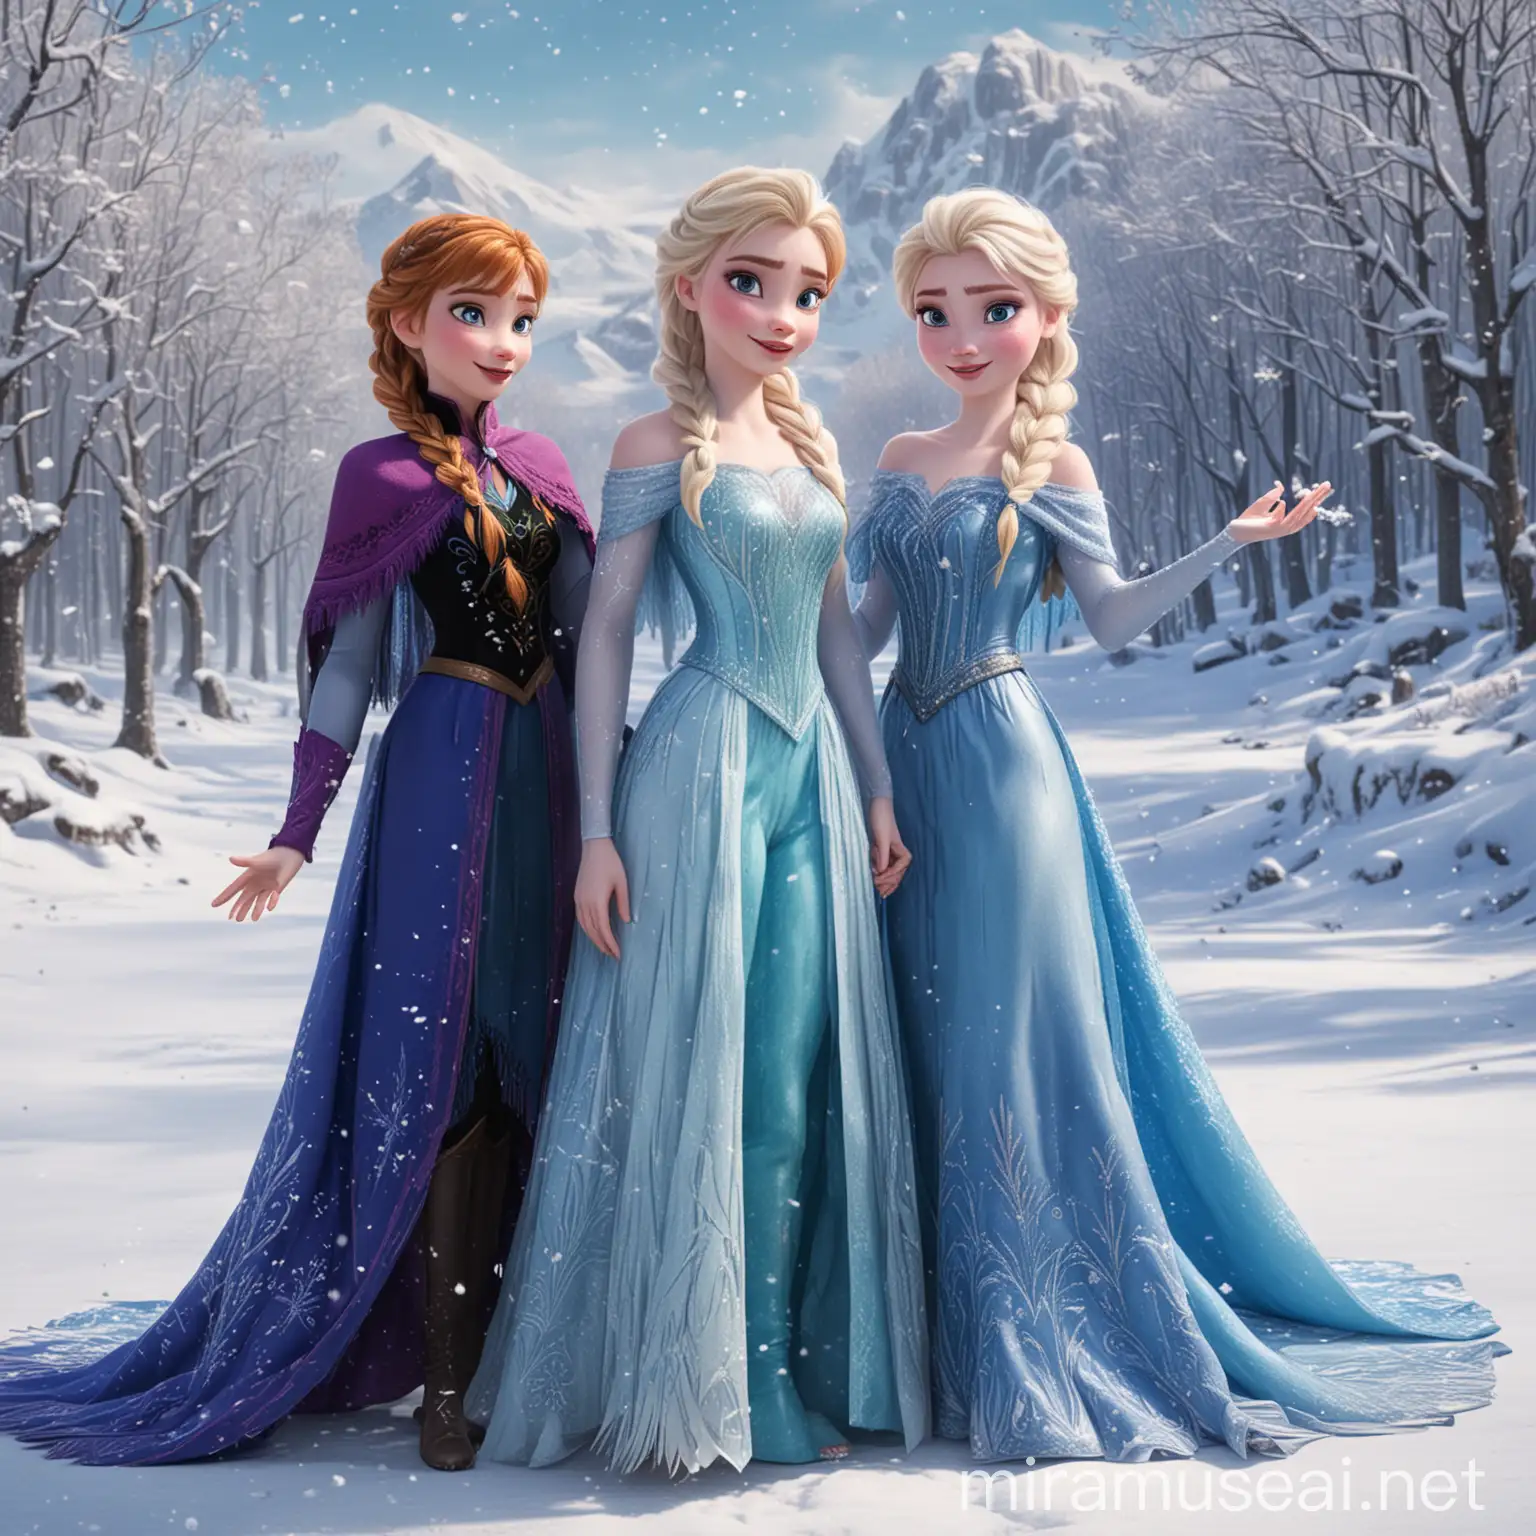 Frozen Princesses Celebrating Birthday in Snowy Landscape